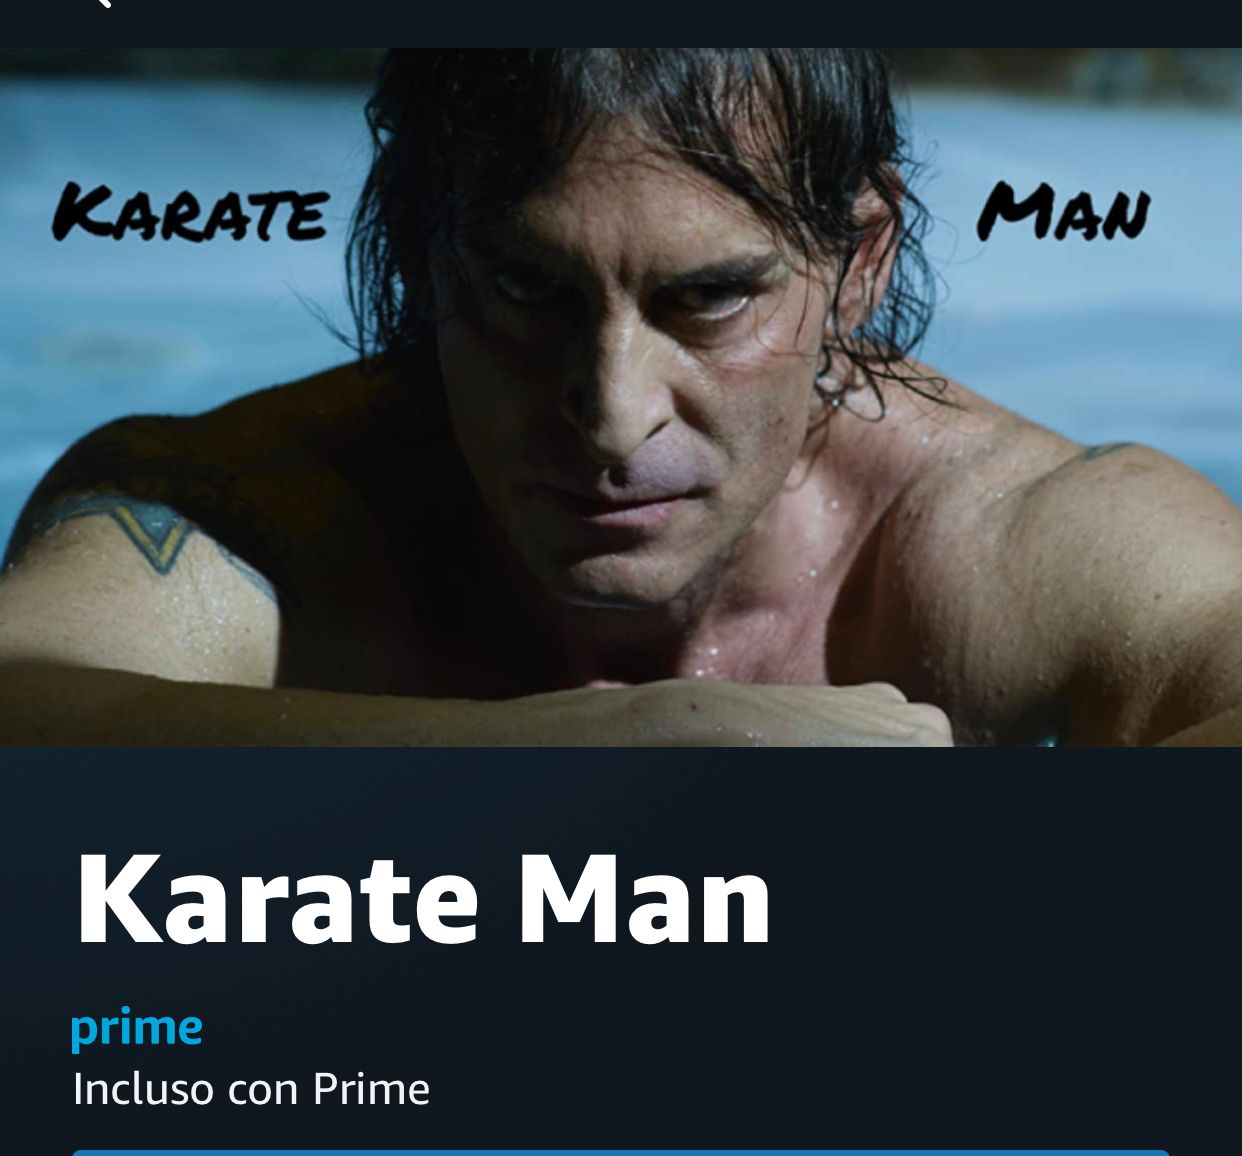 Karate Man prime video